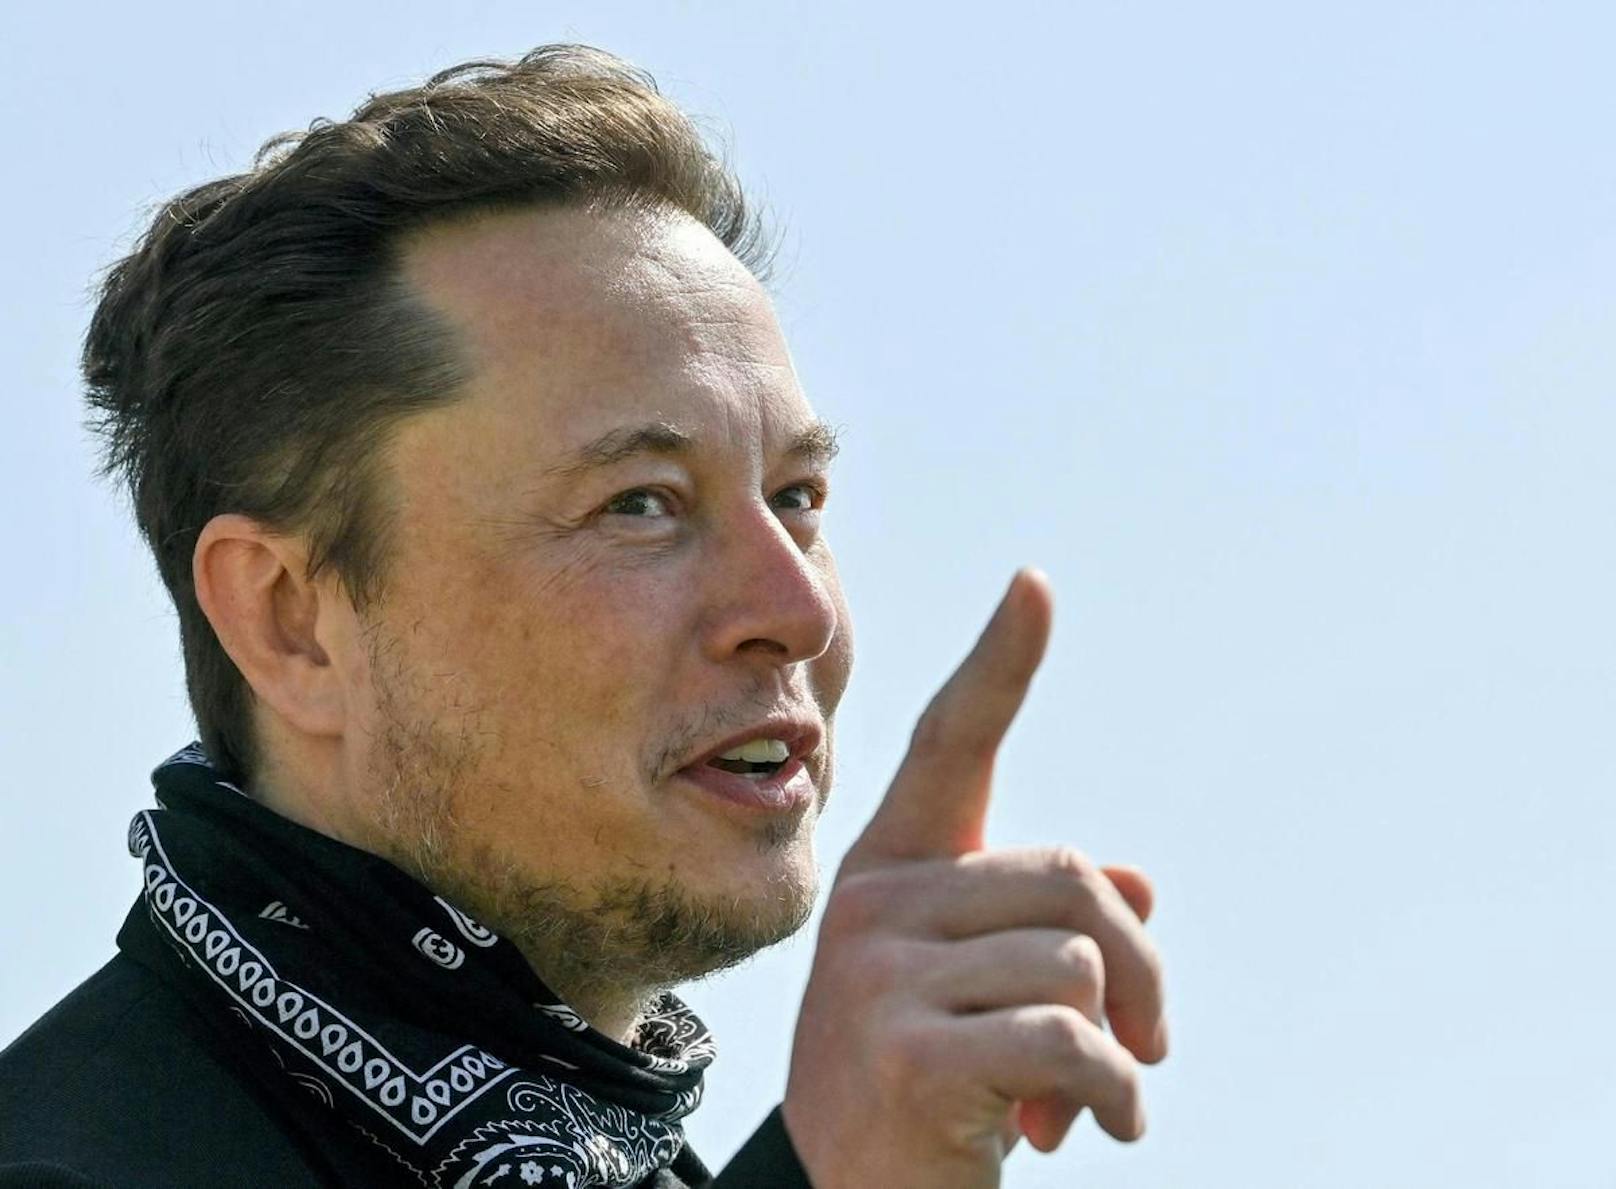 Schmeißt Tesla-Chef Elon Musk nun seinen Job hin?